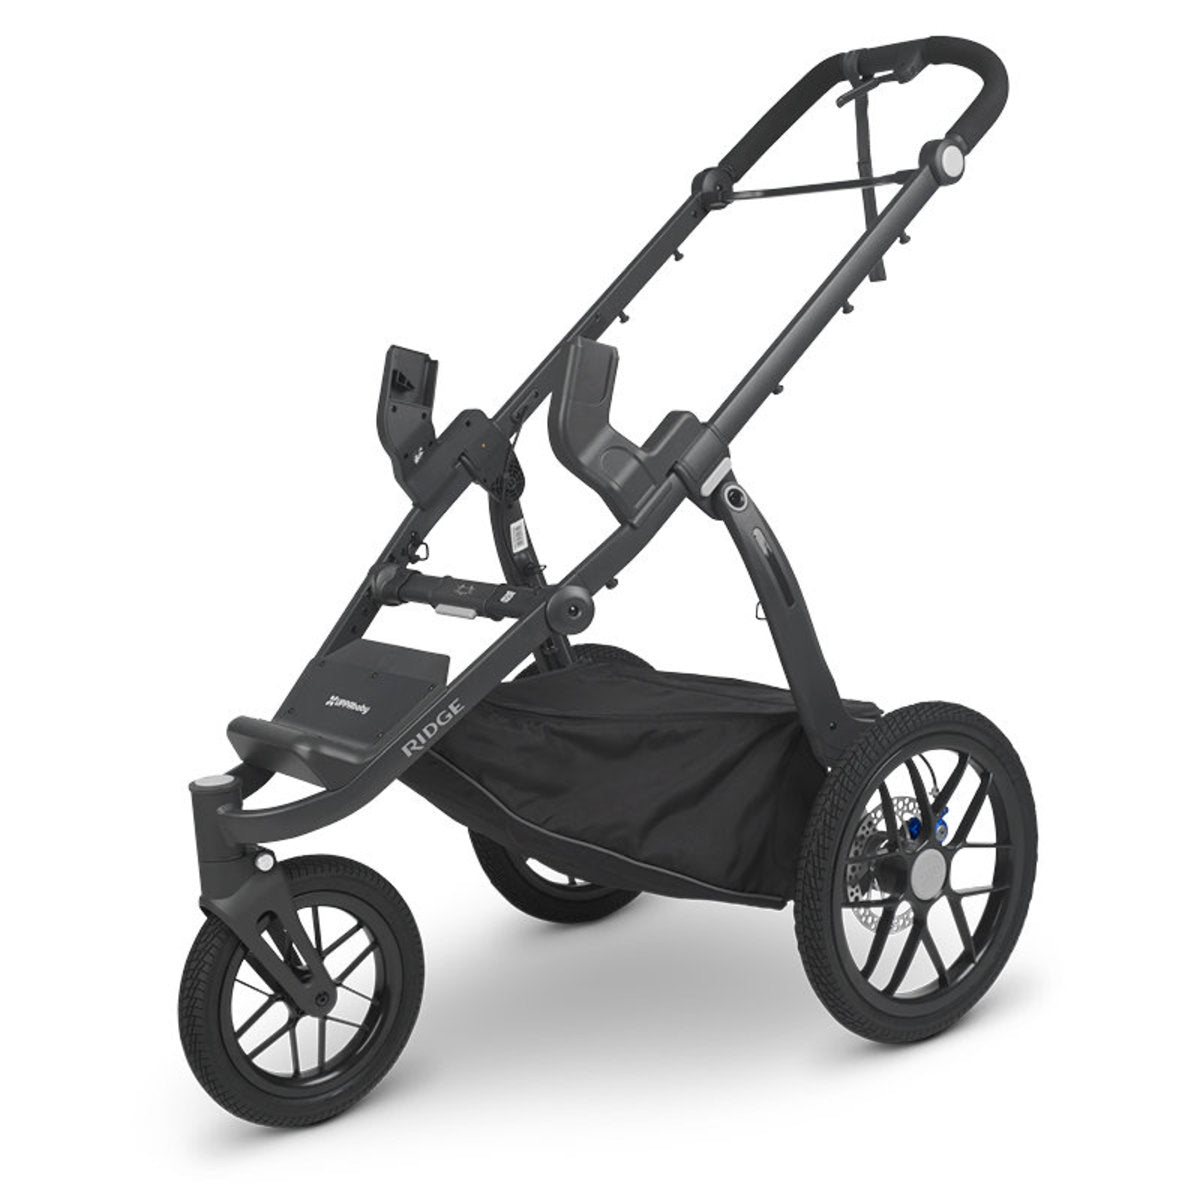 RIDGE Stroller Infant Seat Adapter - Maxi-Cosi, Nuna, Cybex